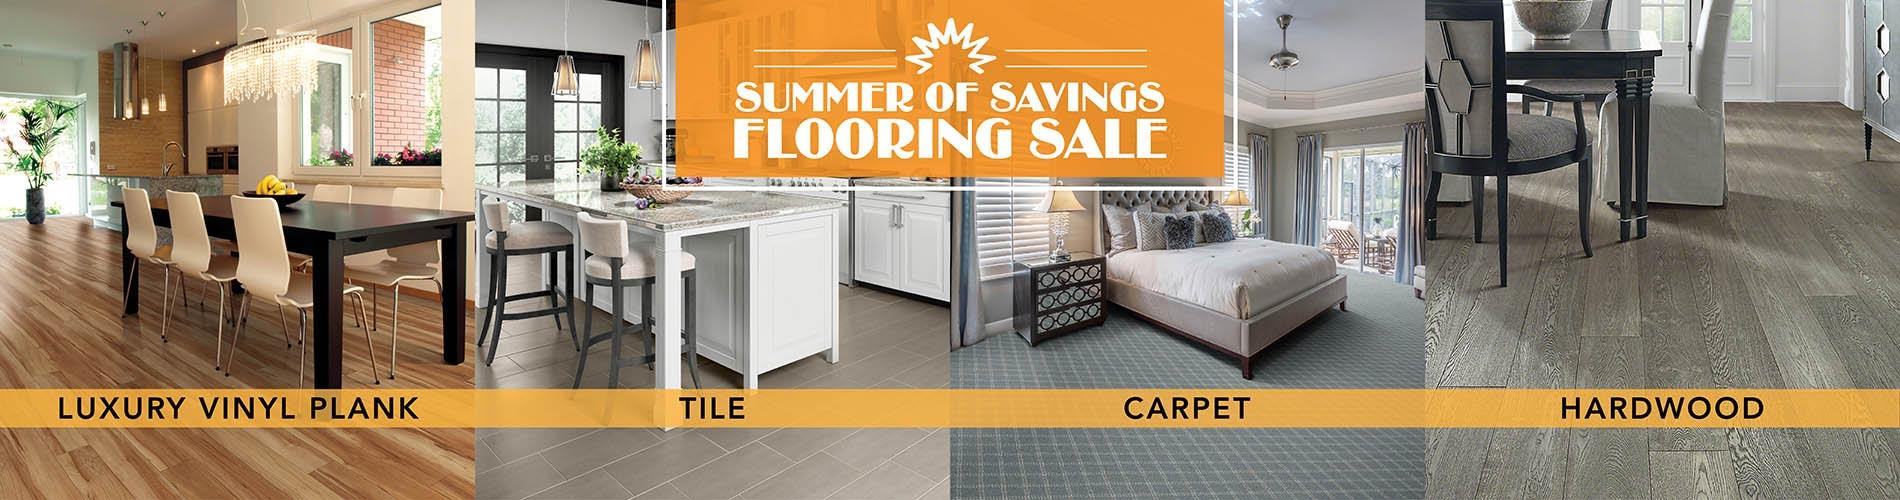 Summer of Savings Flooring Sale. Luxury vinyl plank, tile, carpet, hardwood